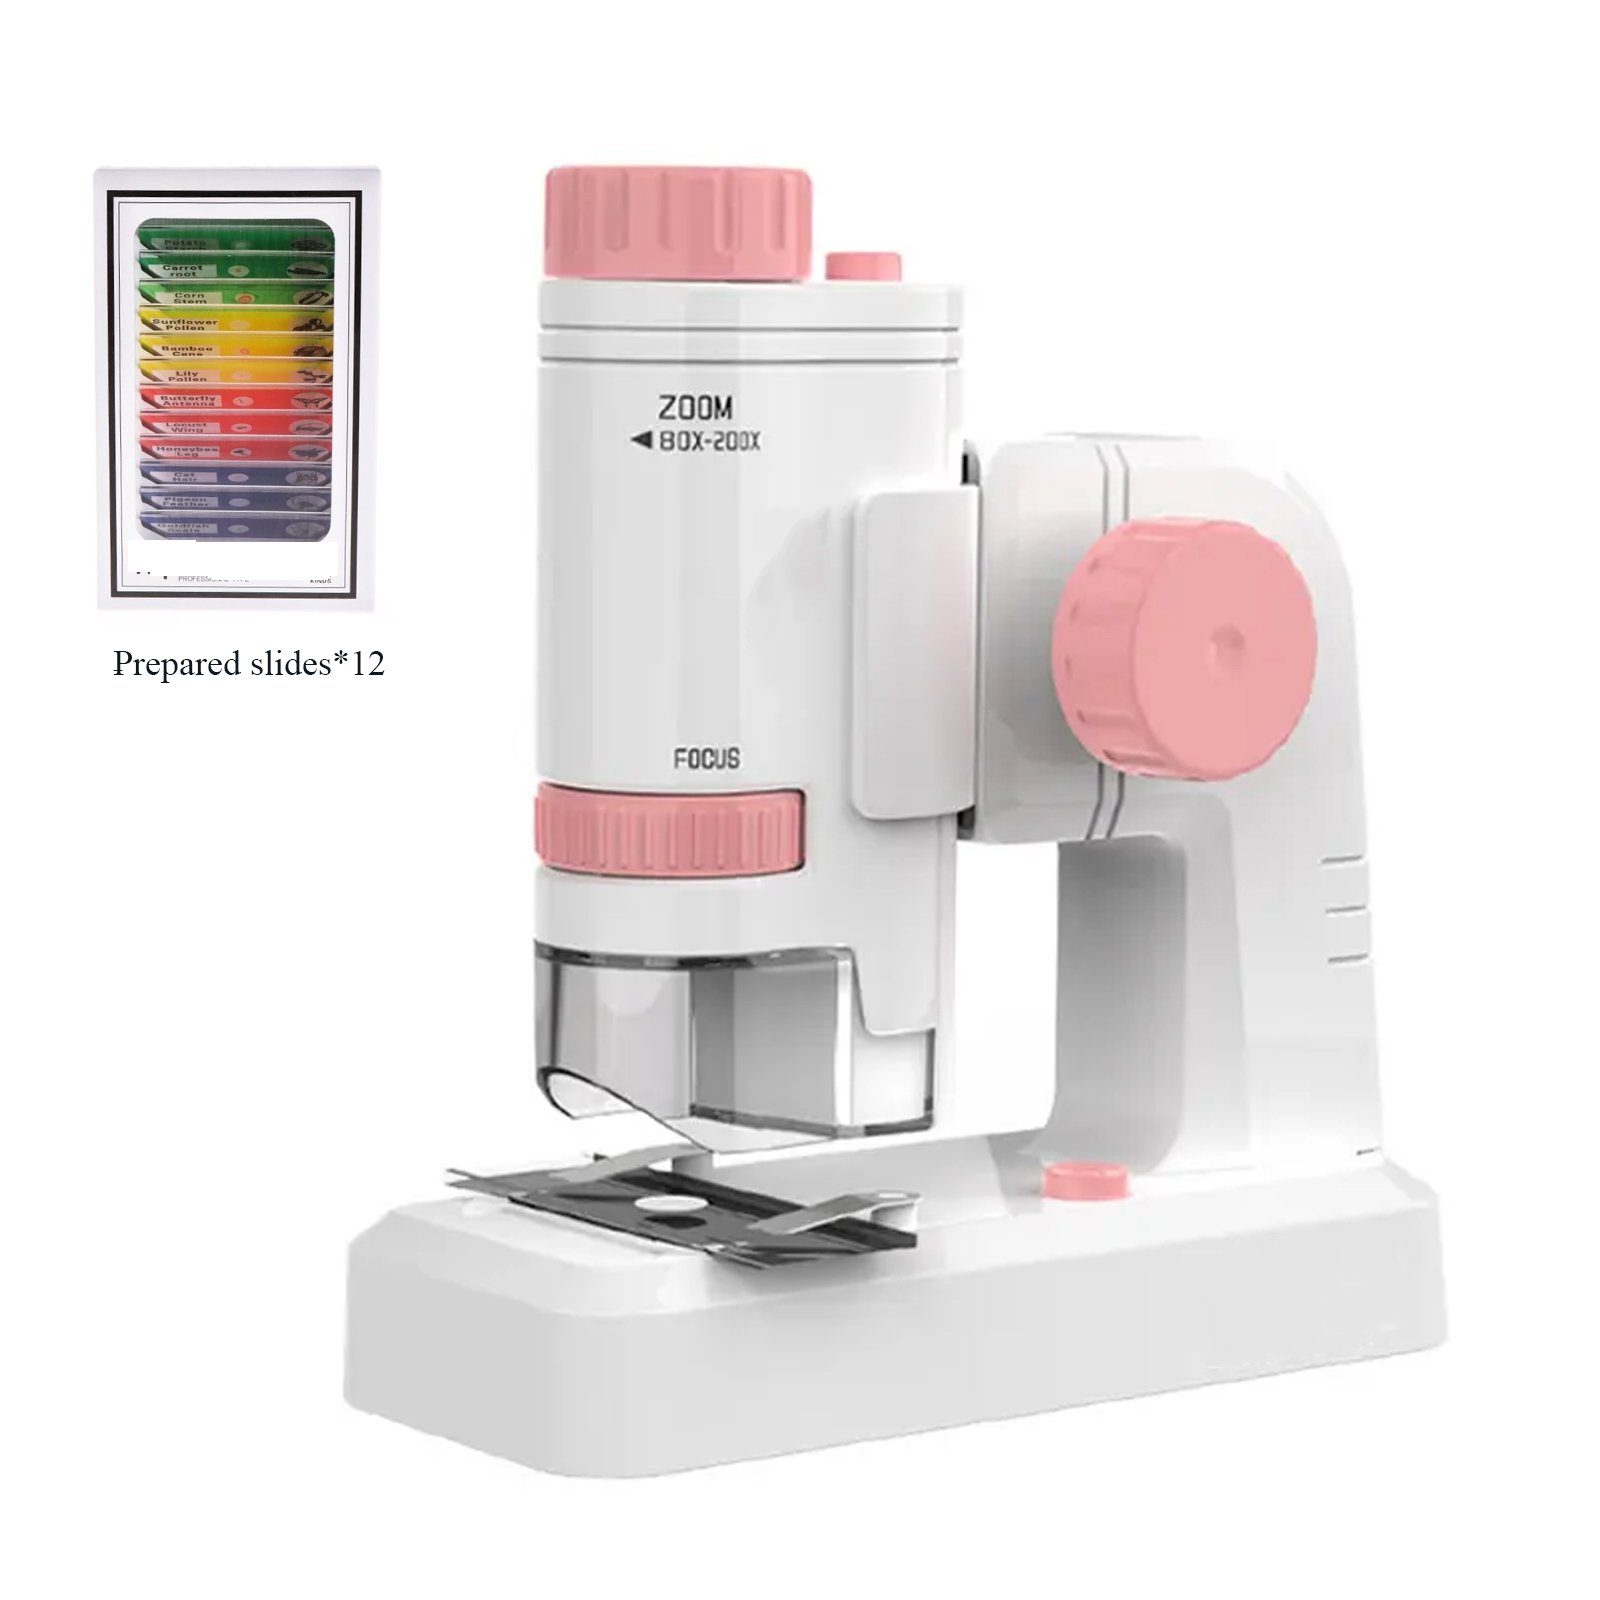 TWSOUL Tragbares Kindermikroskop Kindermikroskop (80x-200x, Kommt mit LED-Beleuchtung, 80-200-fache Vergrößerung)